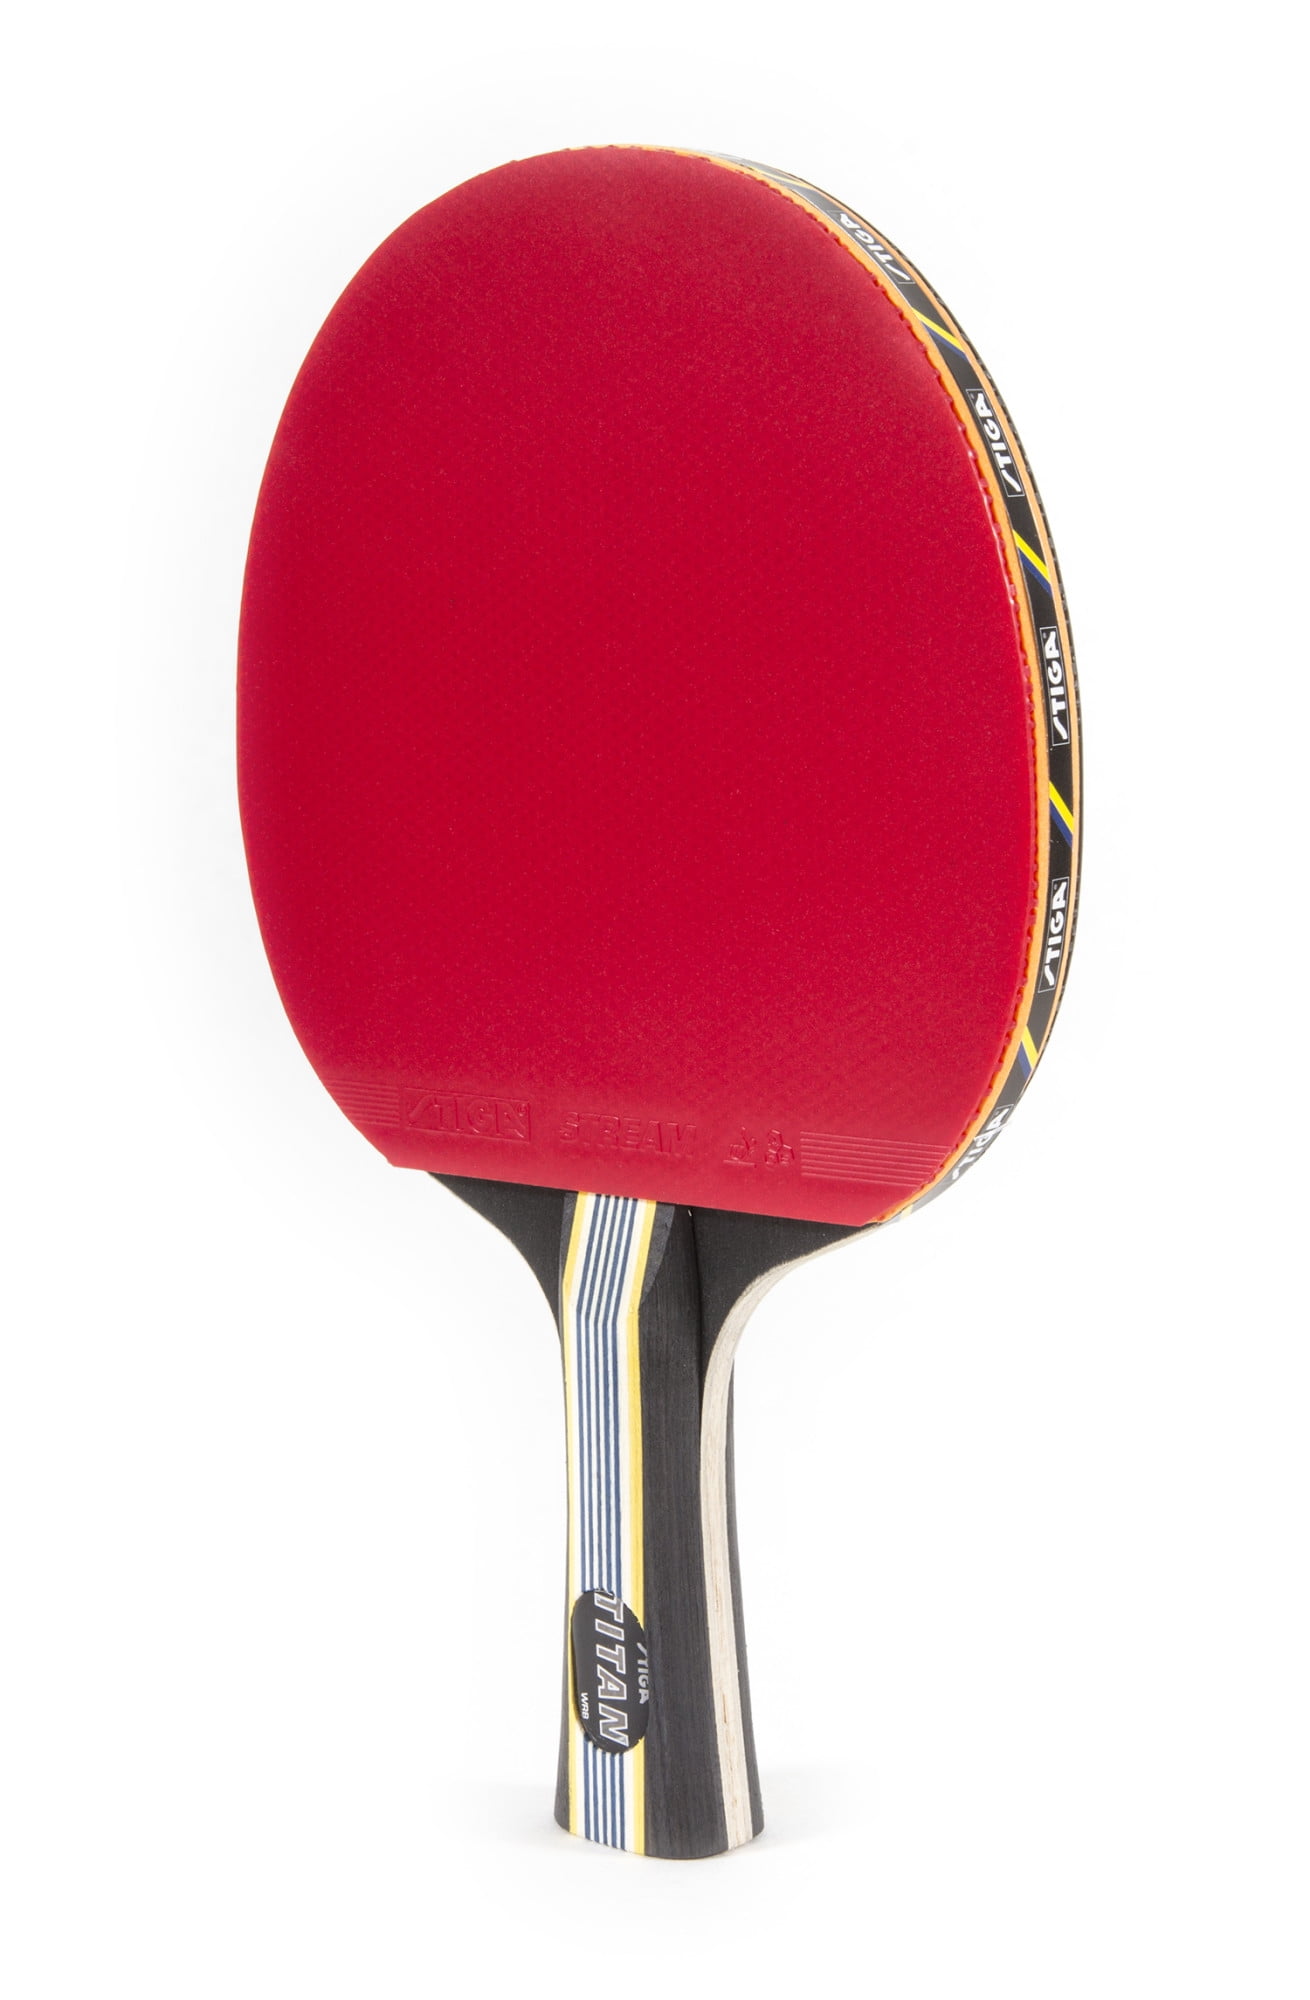 Stiga Nova Bat Paddle Racket Table Tennis Bat 